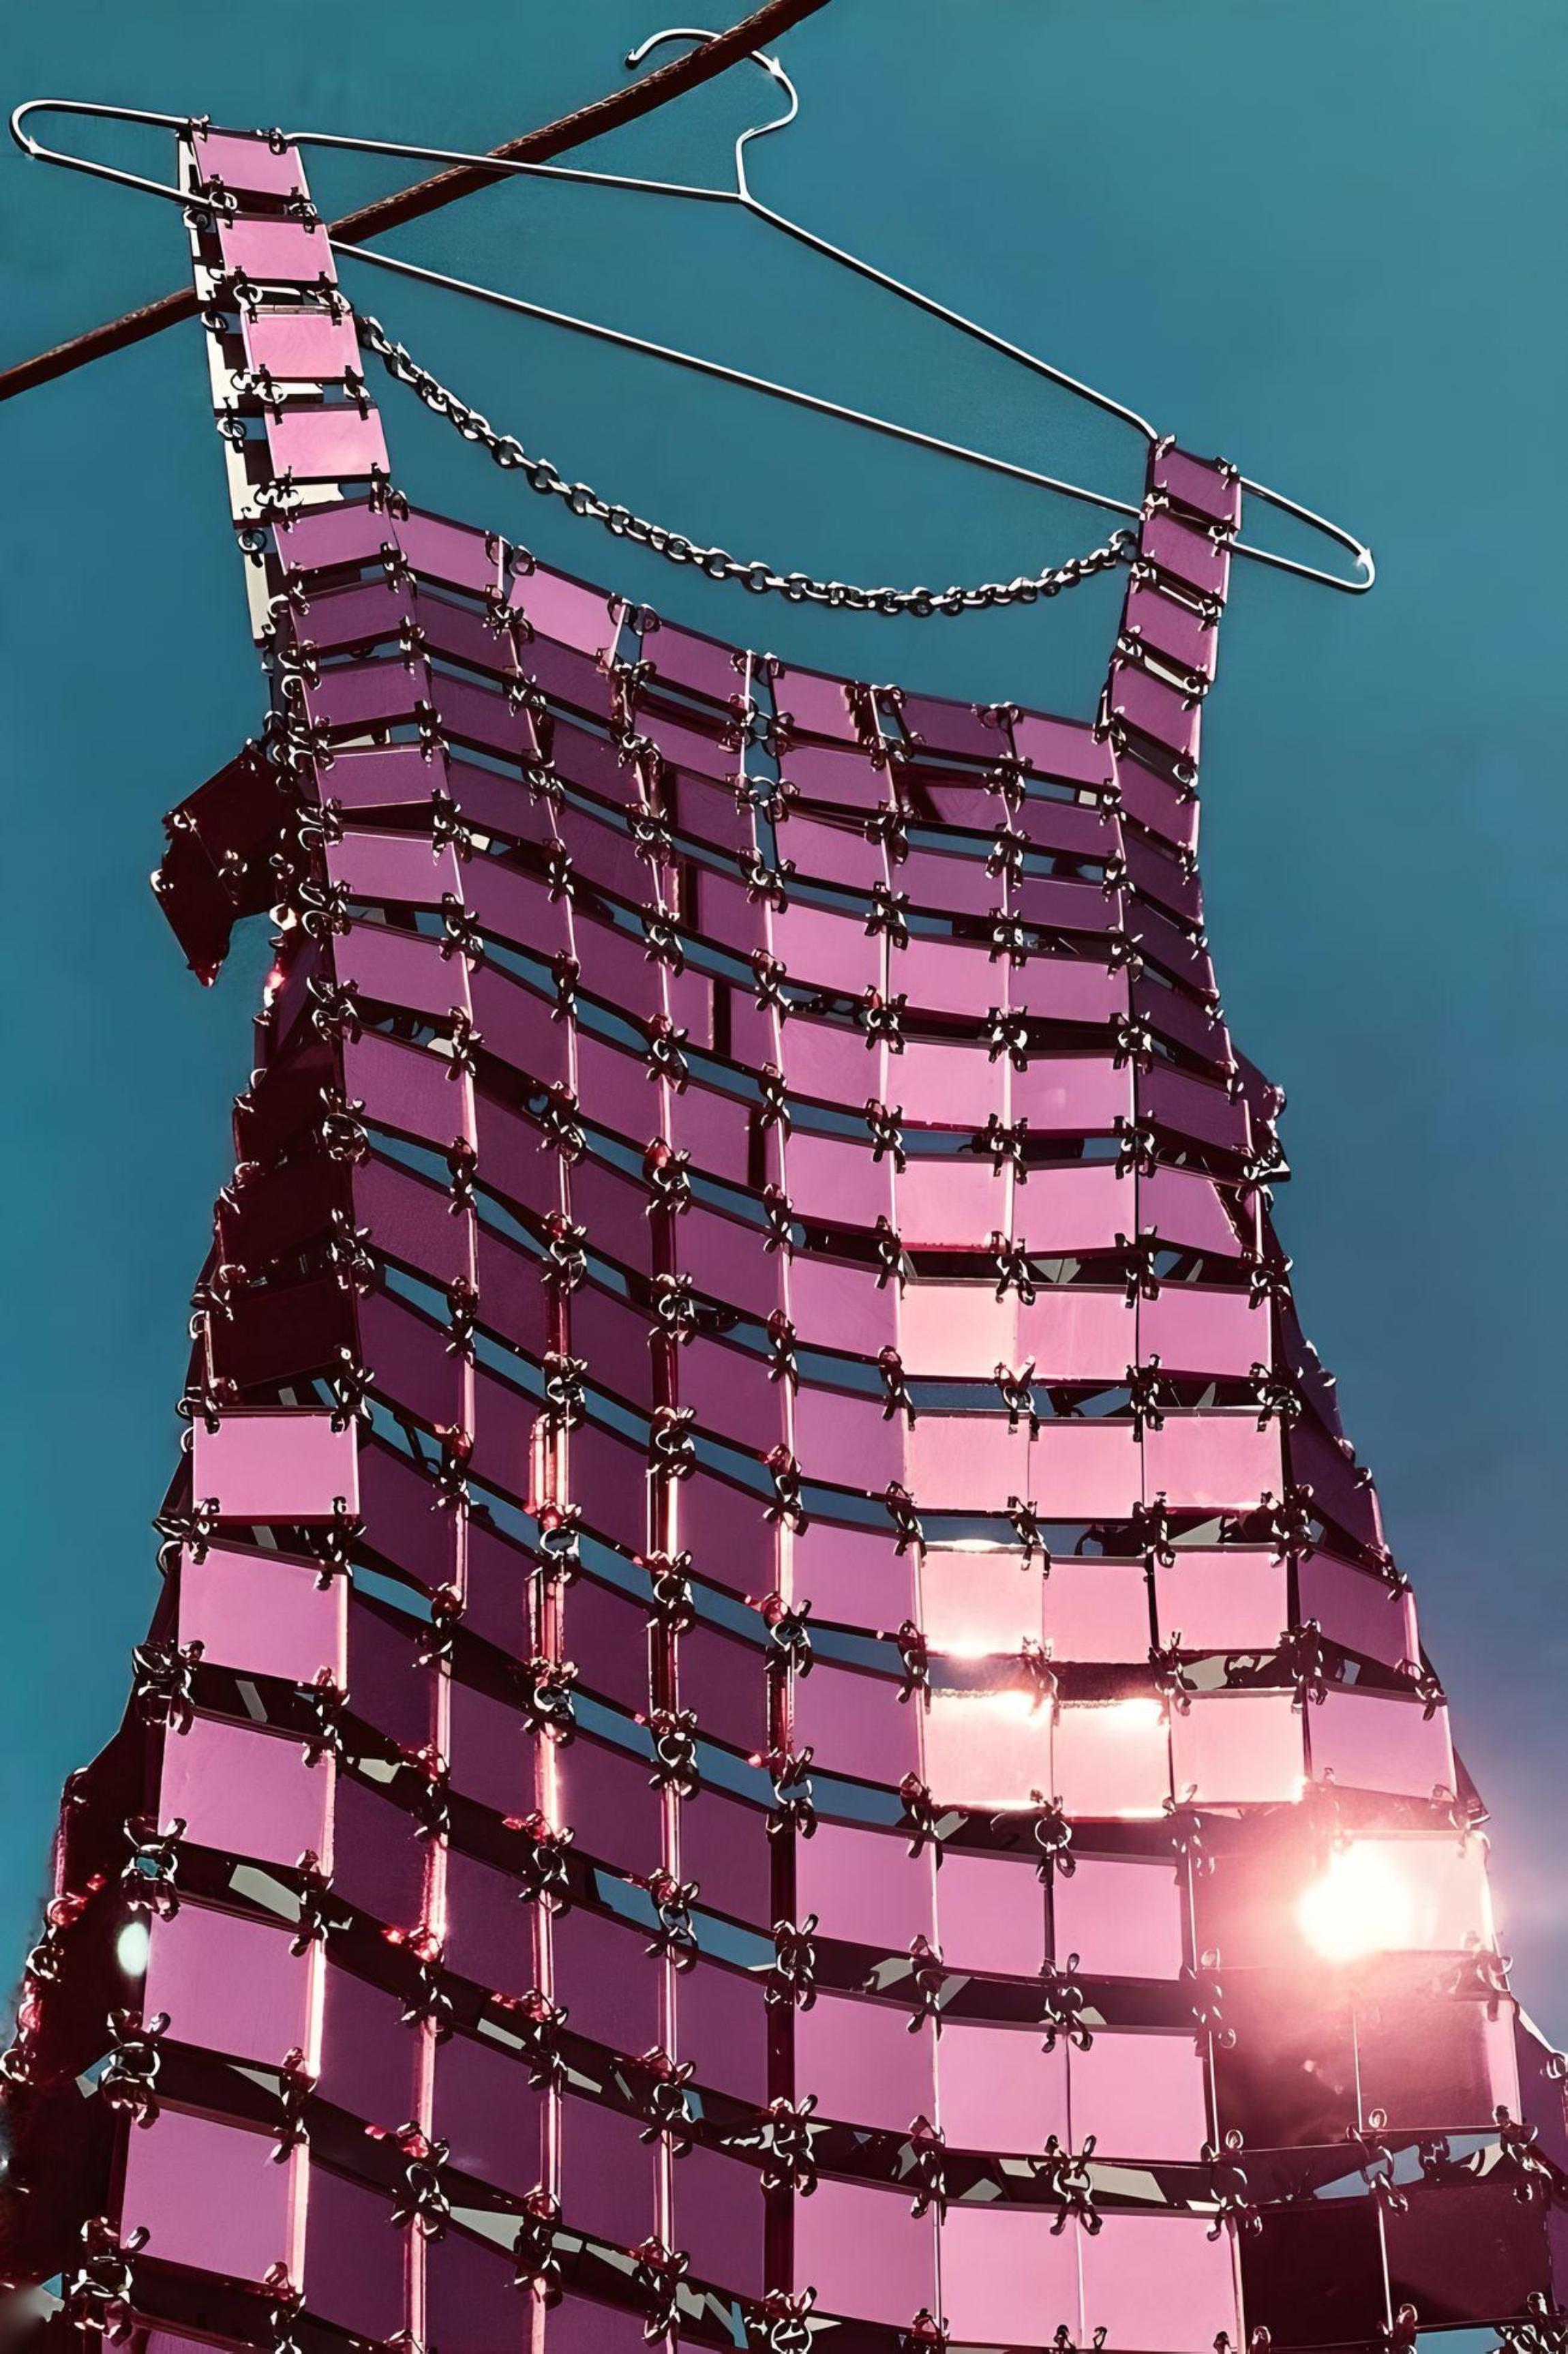 Square Mirrored Dress - Purple